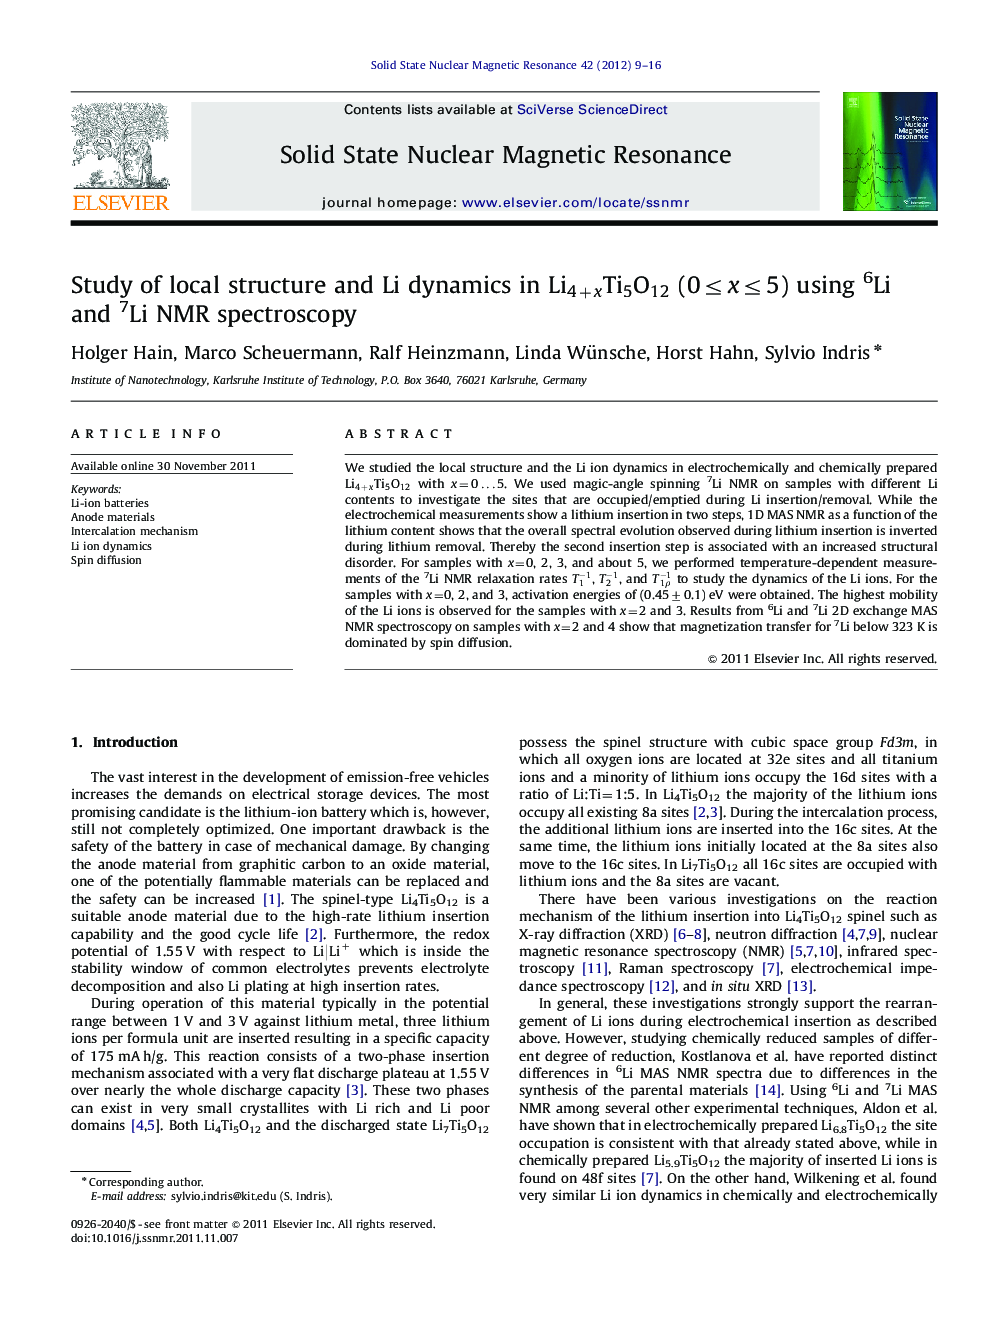 Study of local structure and Li dynamics in Li4+xTi5O12 (0â¤xâ¤5) using 6Li and 7Li NMR spectroscopy